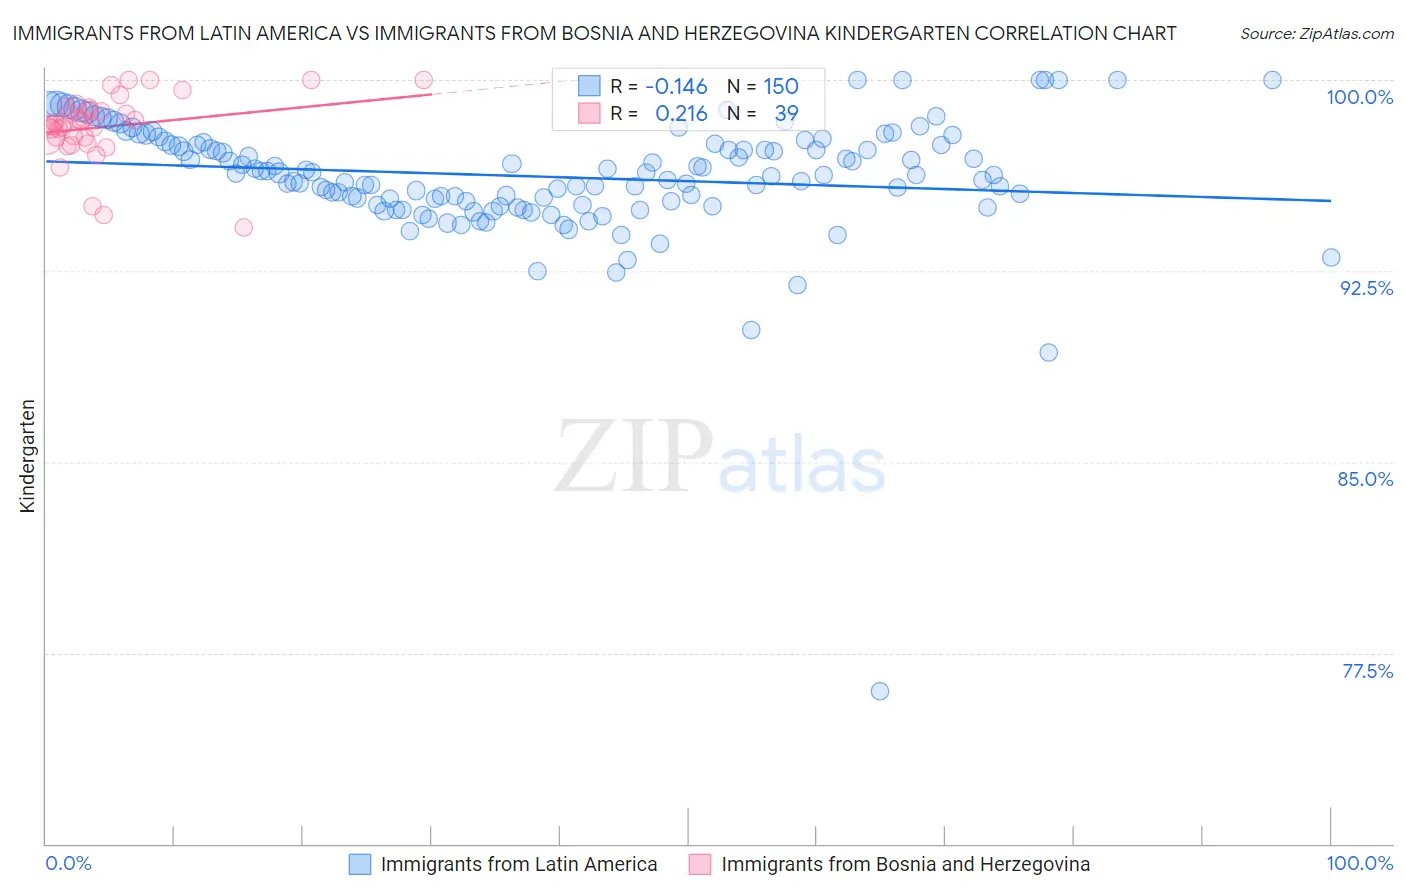 Immigrants from Latin America vs Immigrants from Bosnia and Herzegovina Kindergarten